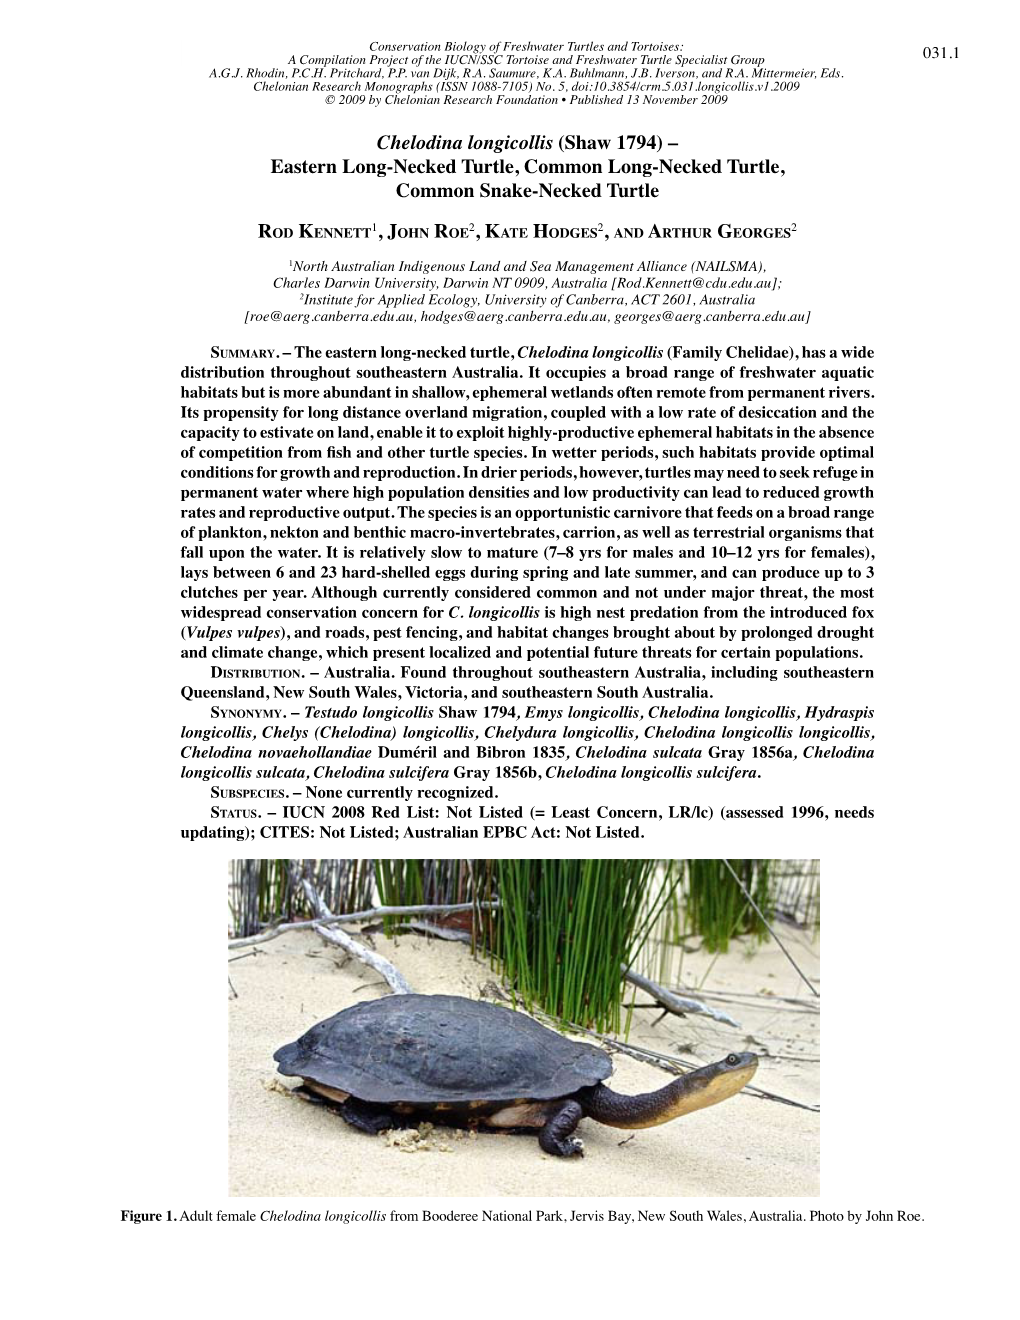 Chelodina Longicollis (Shaw 1794) – Eastern Long-Necked Turtle, Common Long-Necked Turtle, Common Snake-Necked Turtle